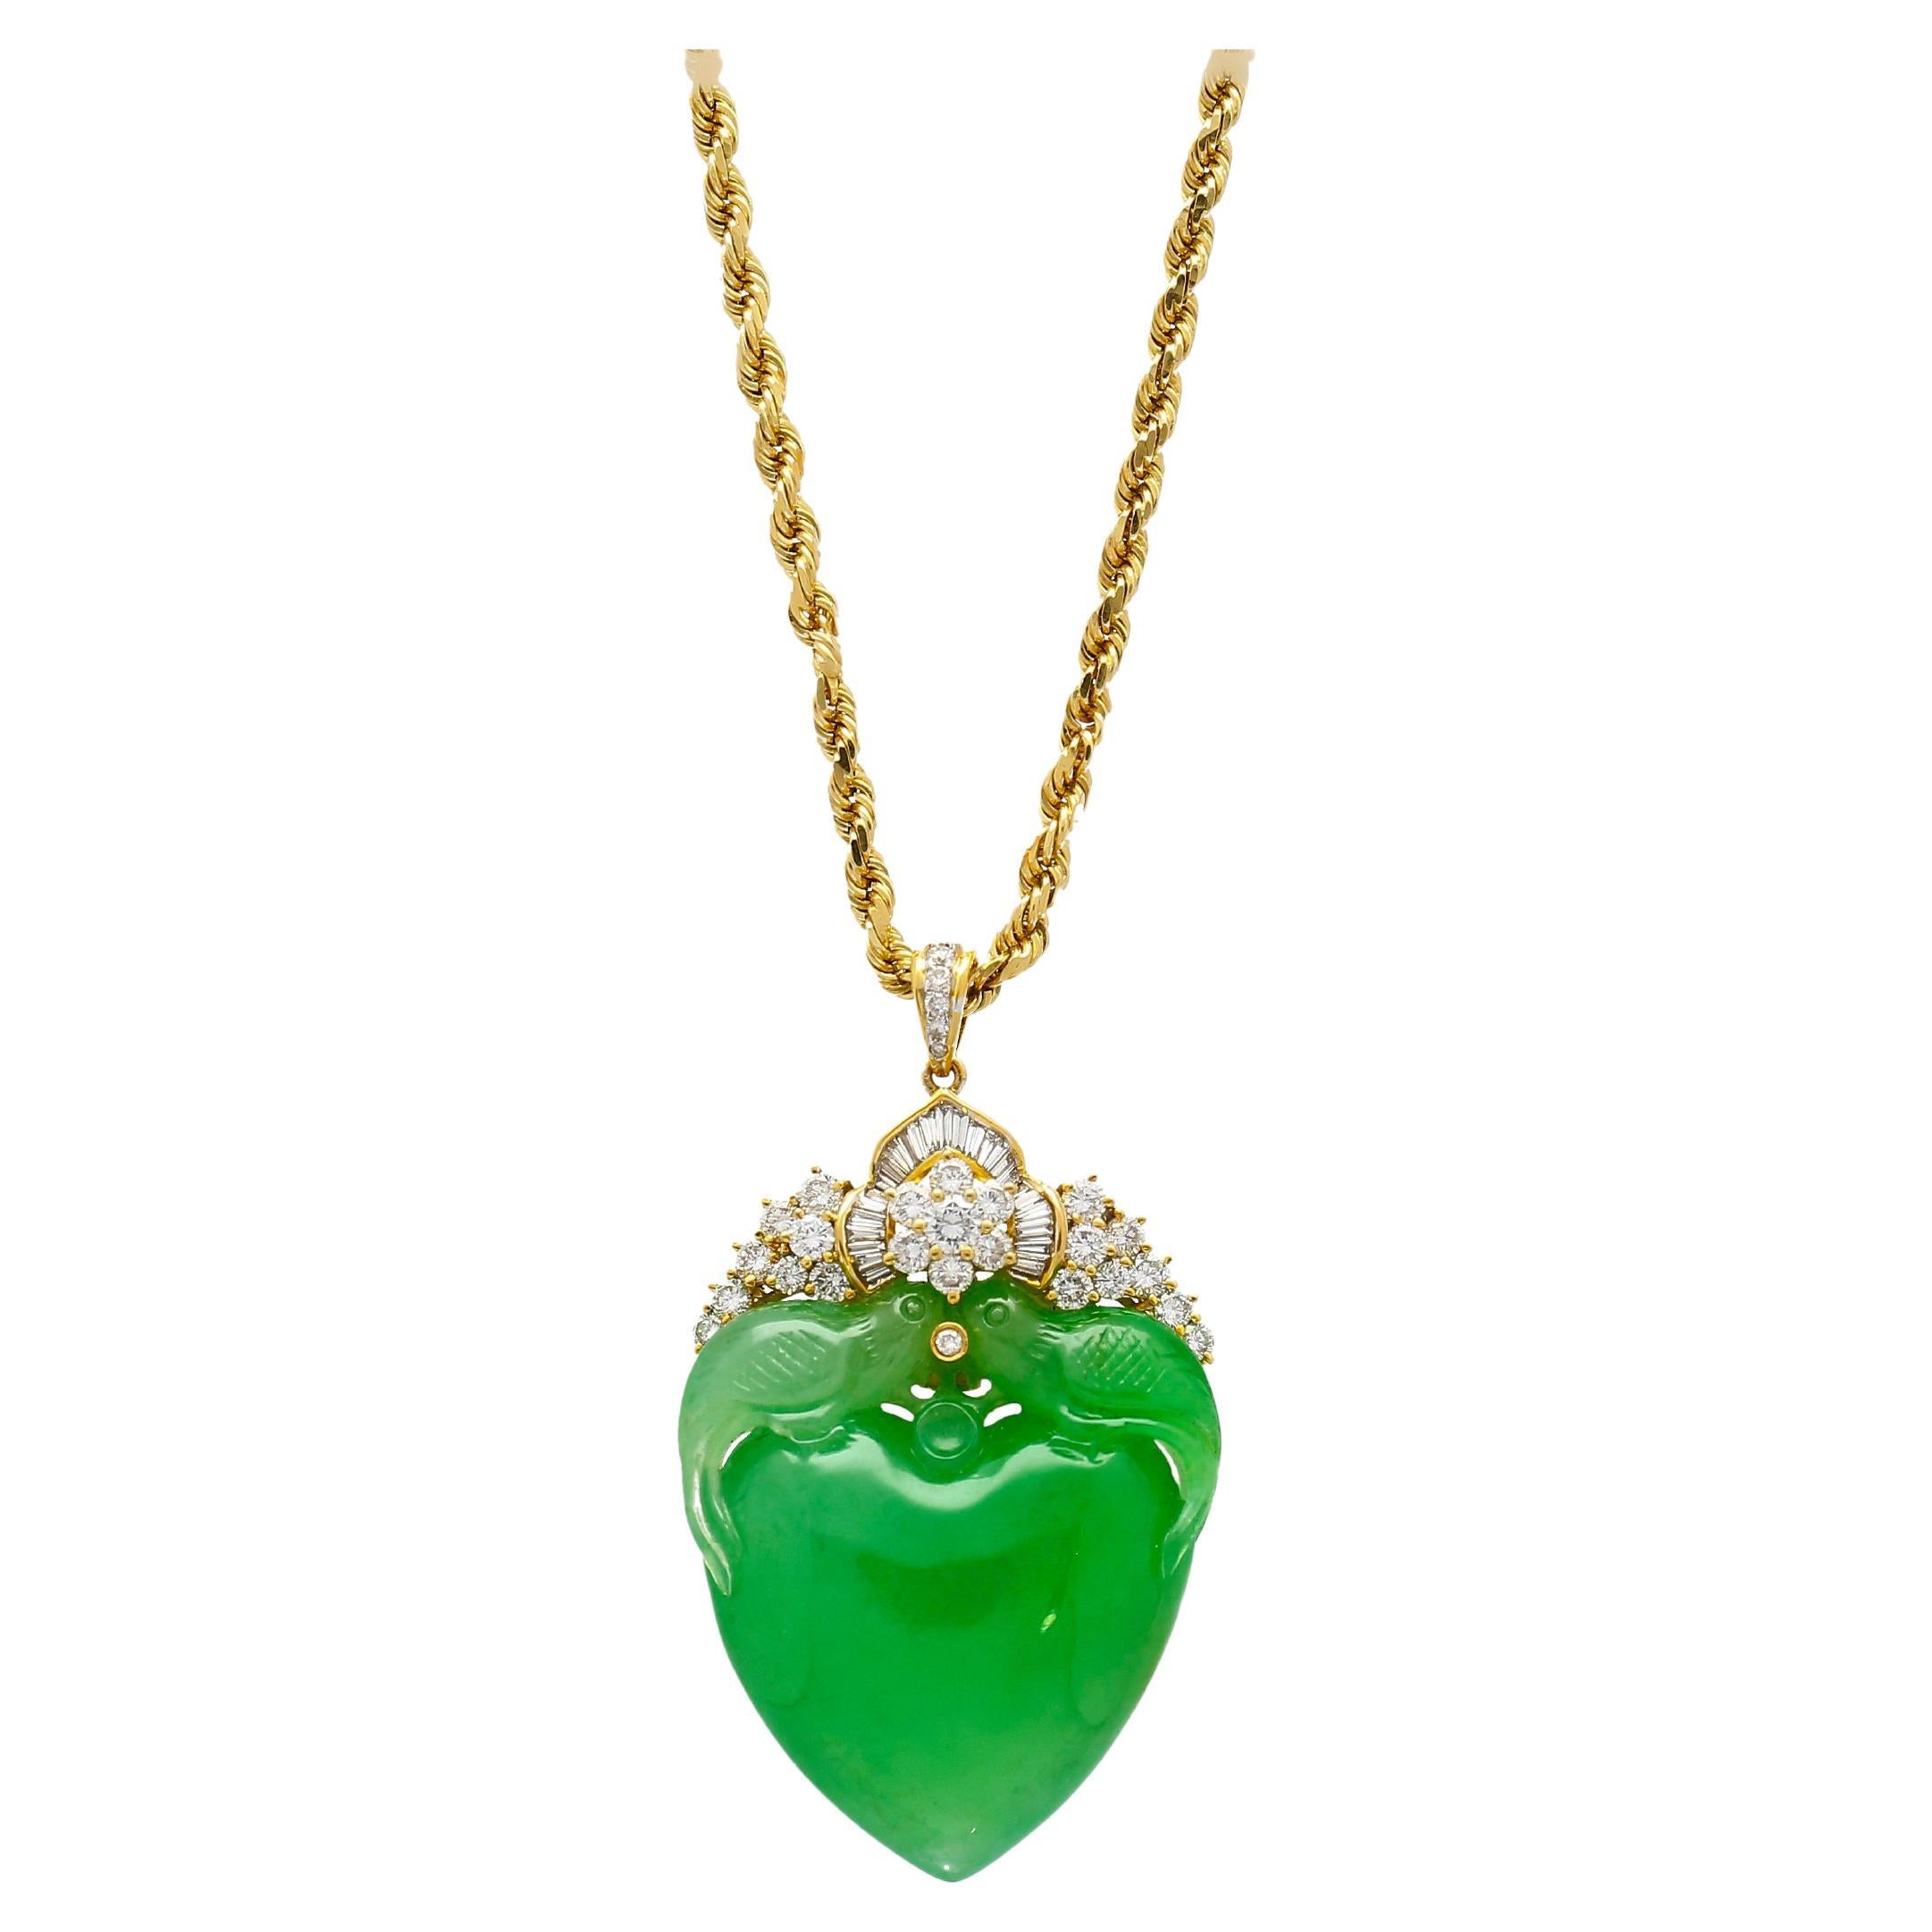 Carved Heart Jadeite Jade Bird Feeding Motif Pendant Necklace in 18k Gold 